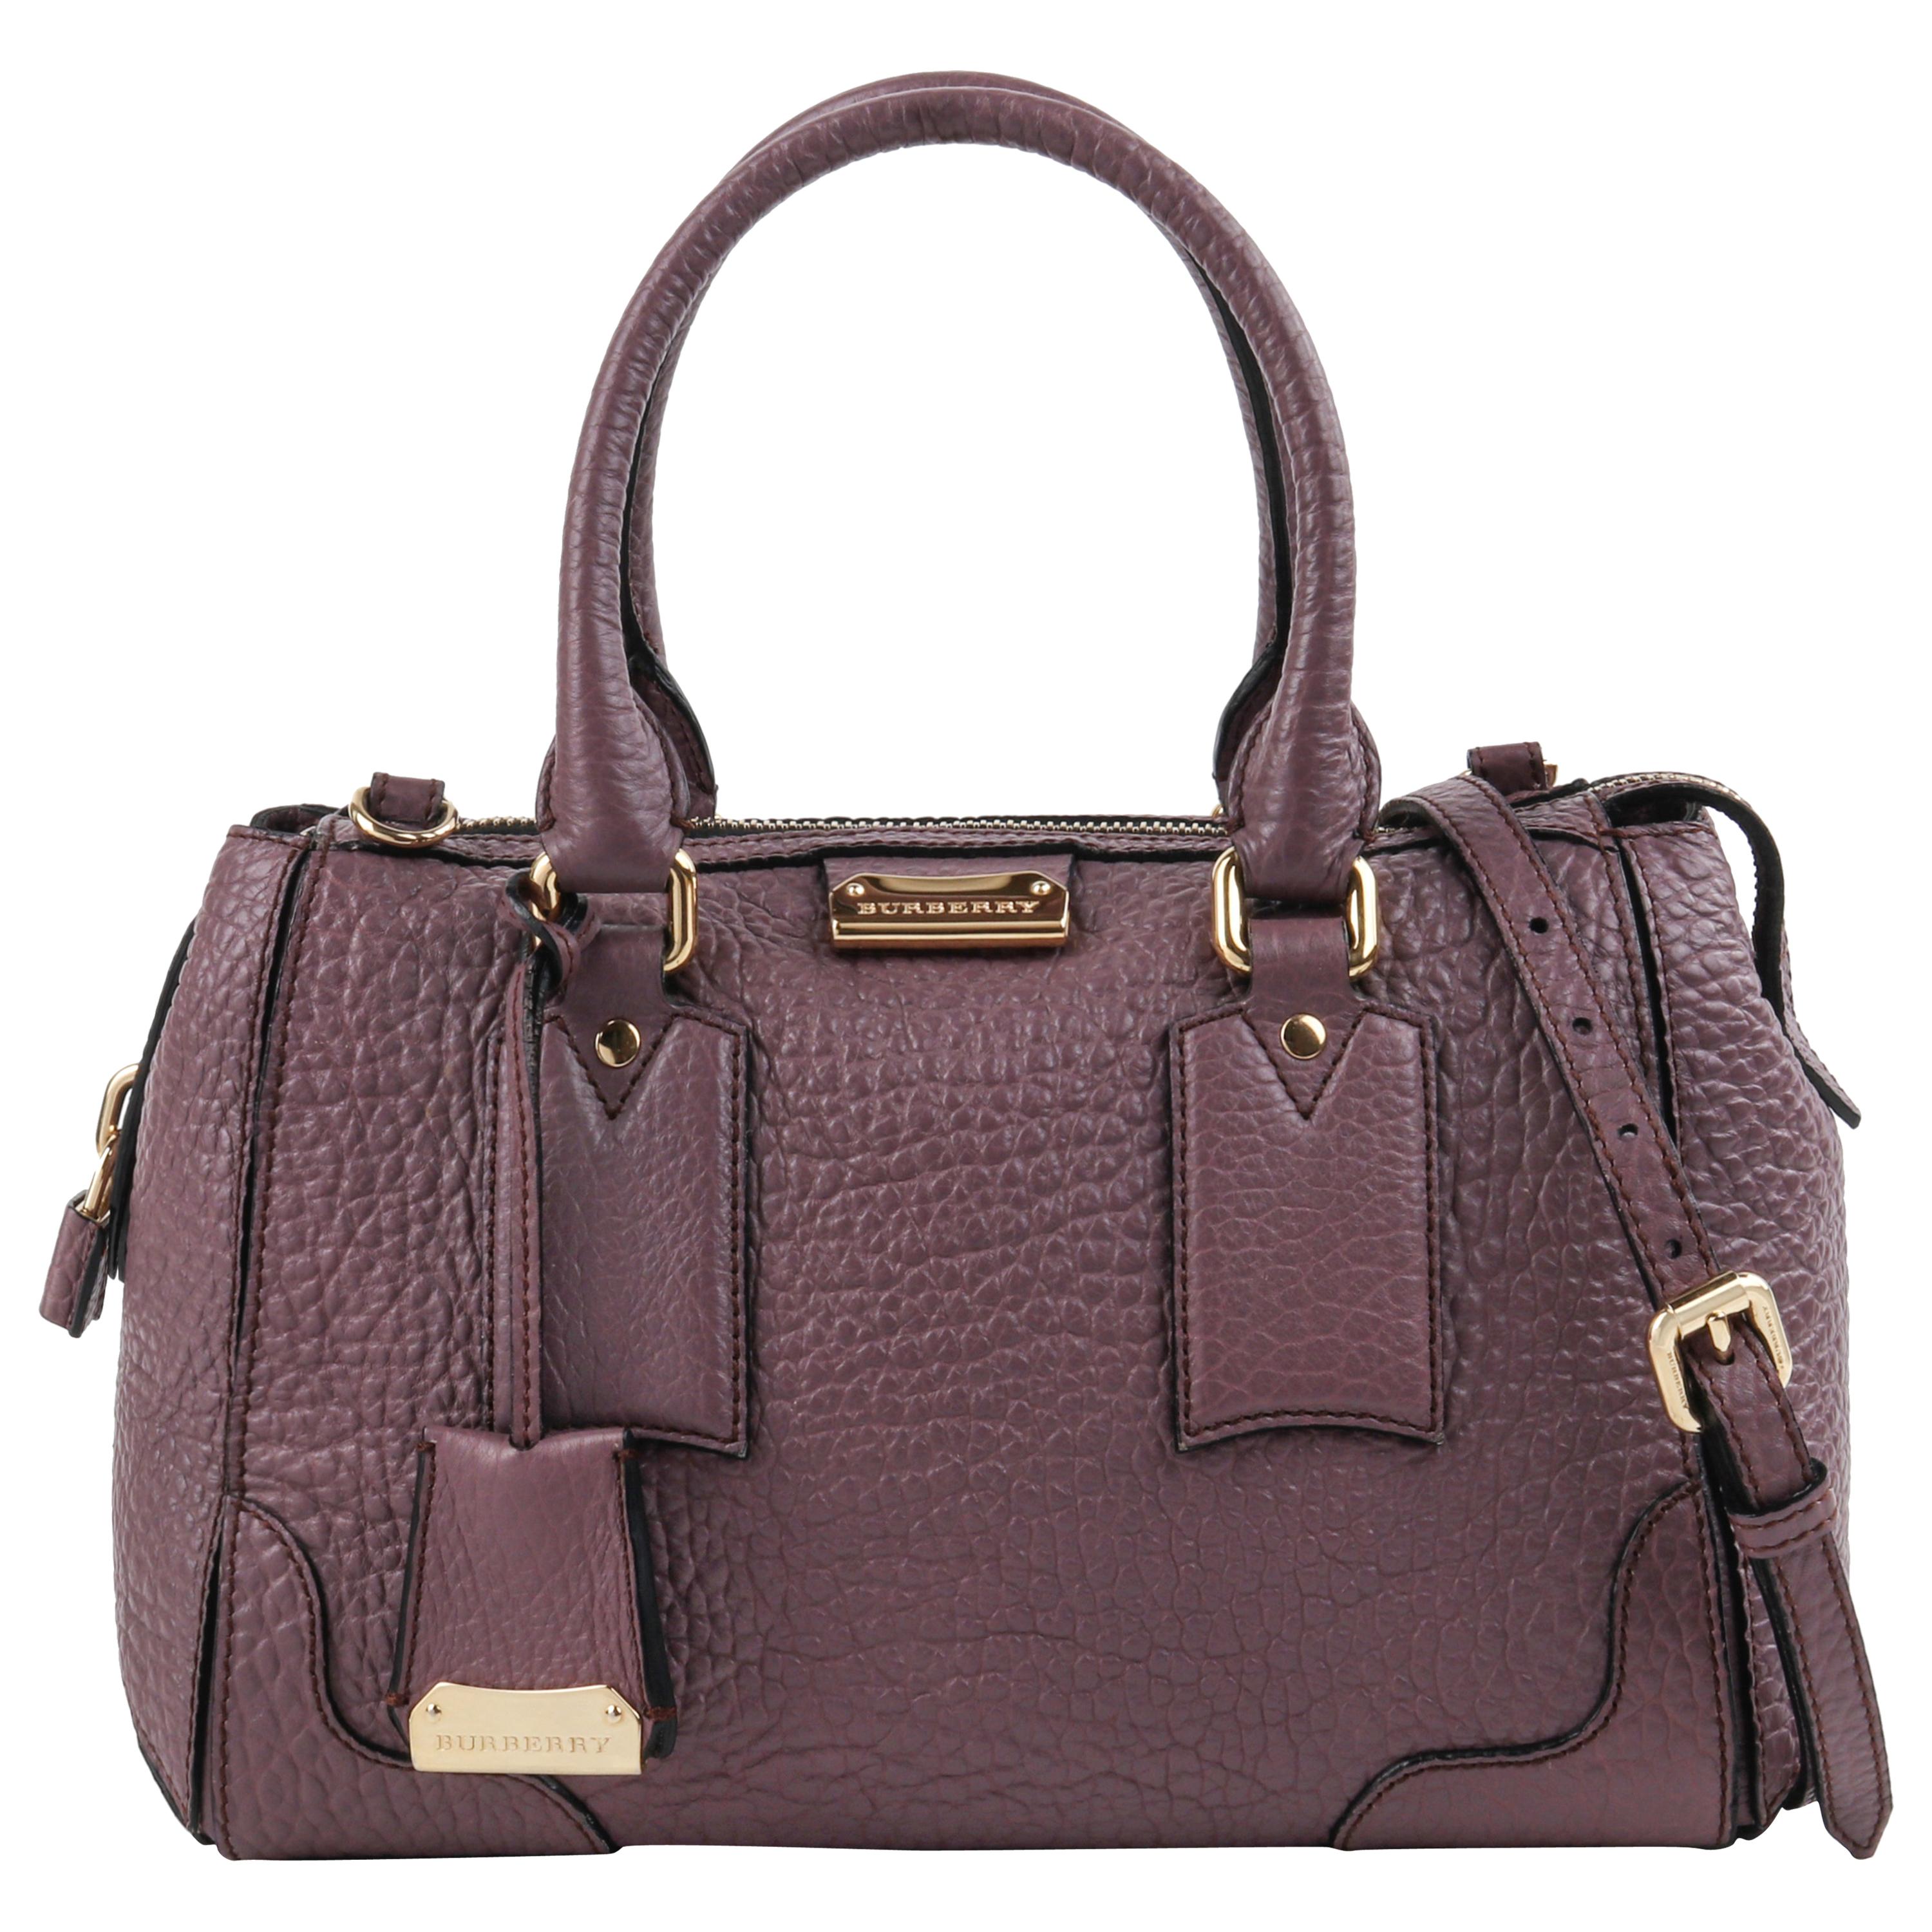 BURBERRY "Gladstone" Mauve Heritage Leather Top Handle Satchel Handbag